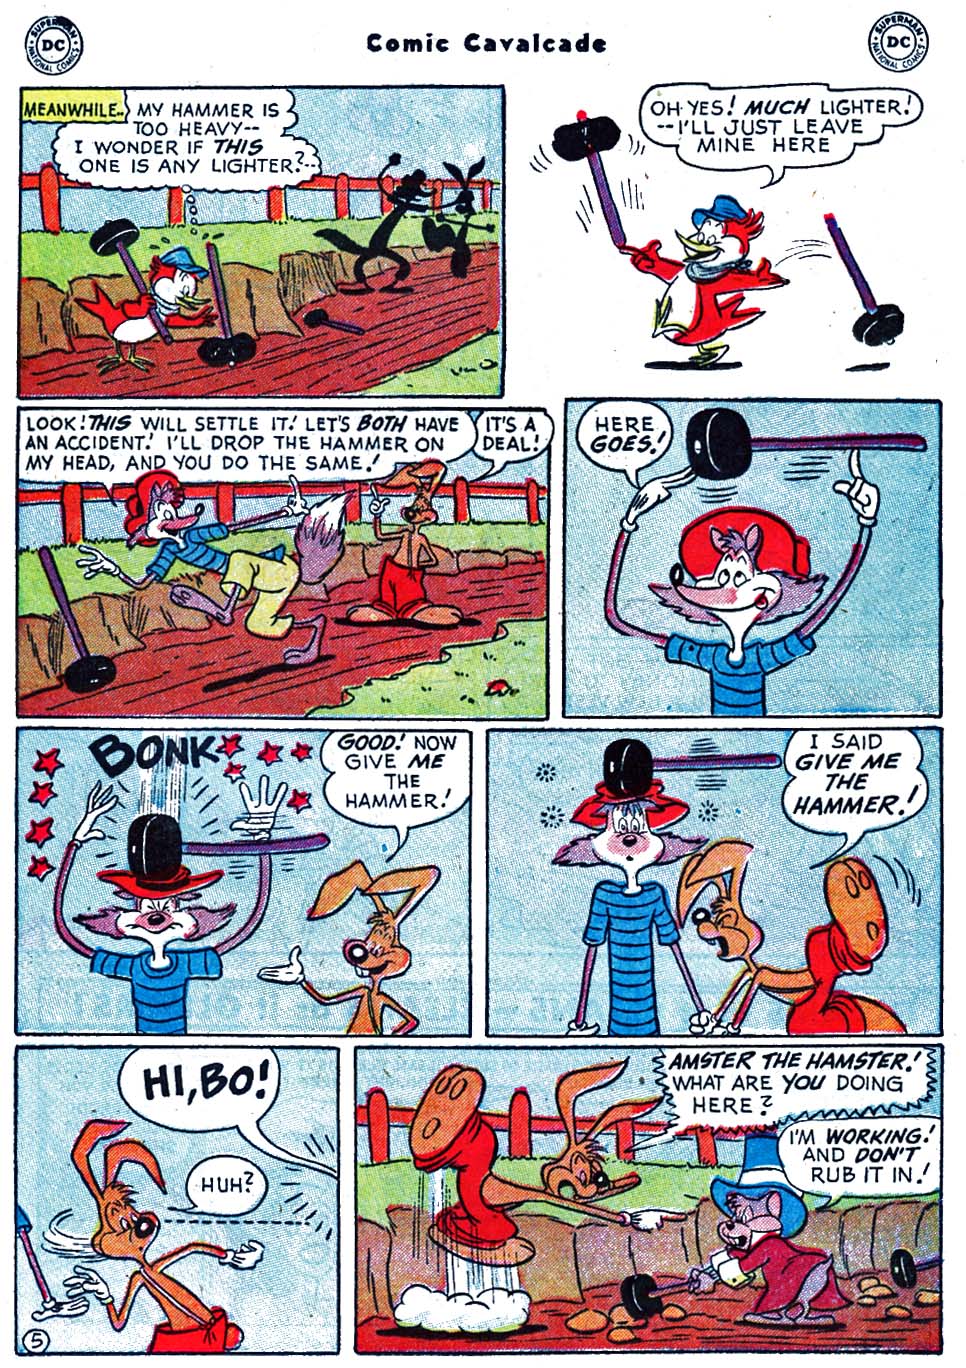 Comic Cavalcade issue 51 - Page 27